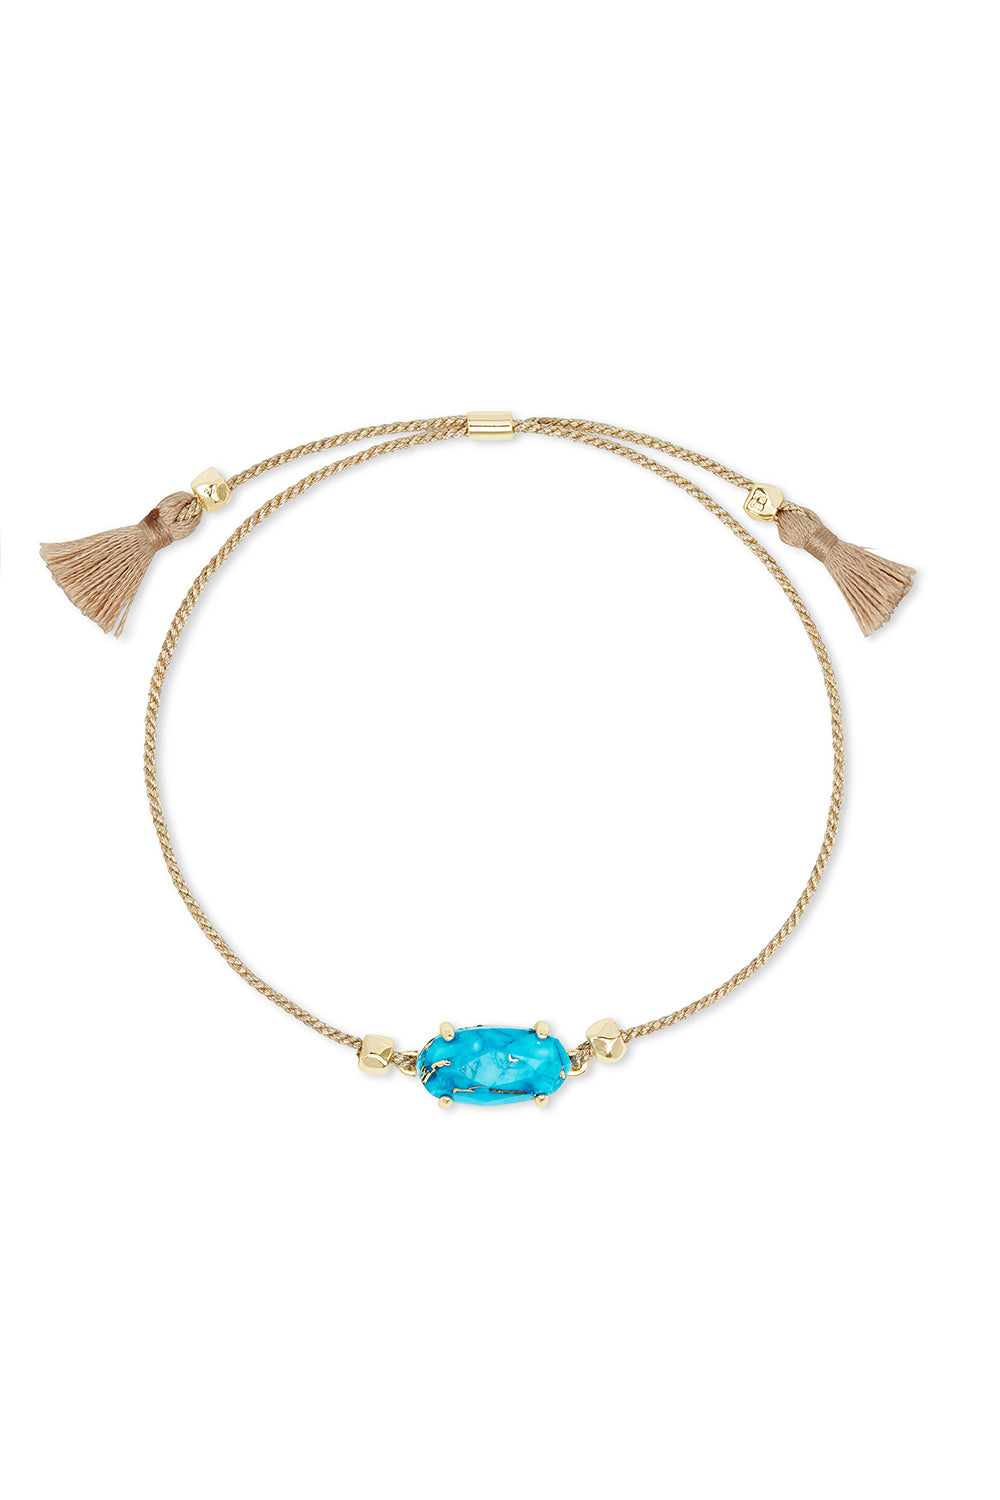 Kendra Scott: Everlyne Gold Cord Friendship Bracelet - Bronze Veined Turquoise | Makk Fashions